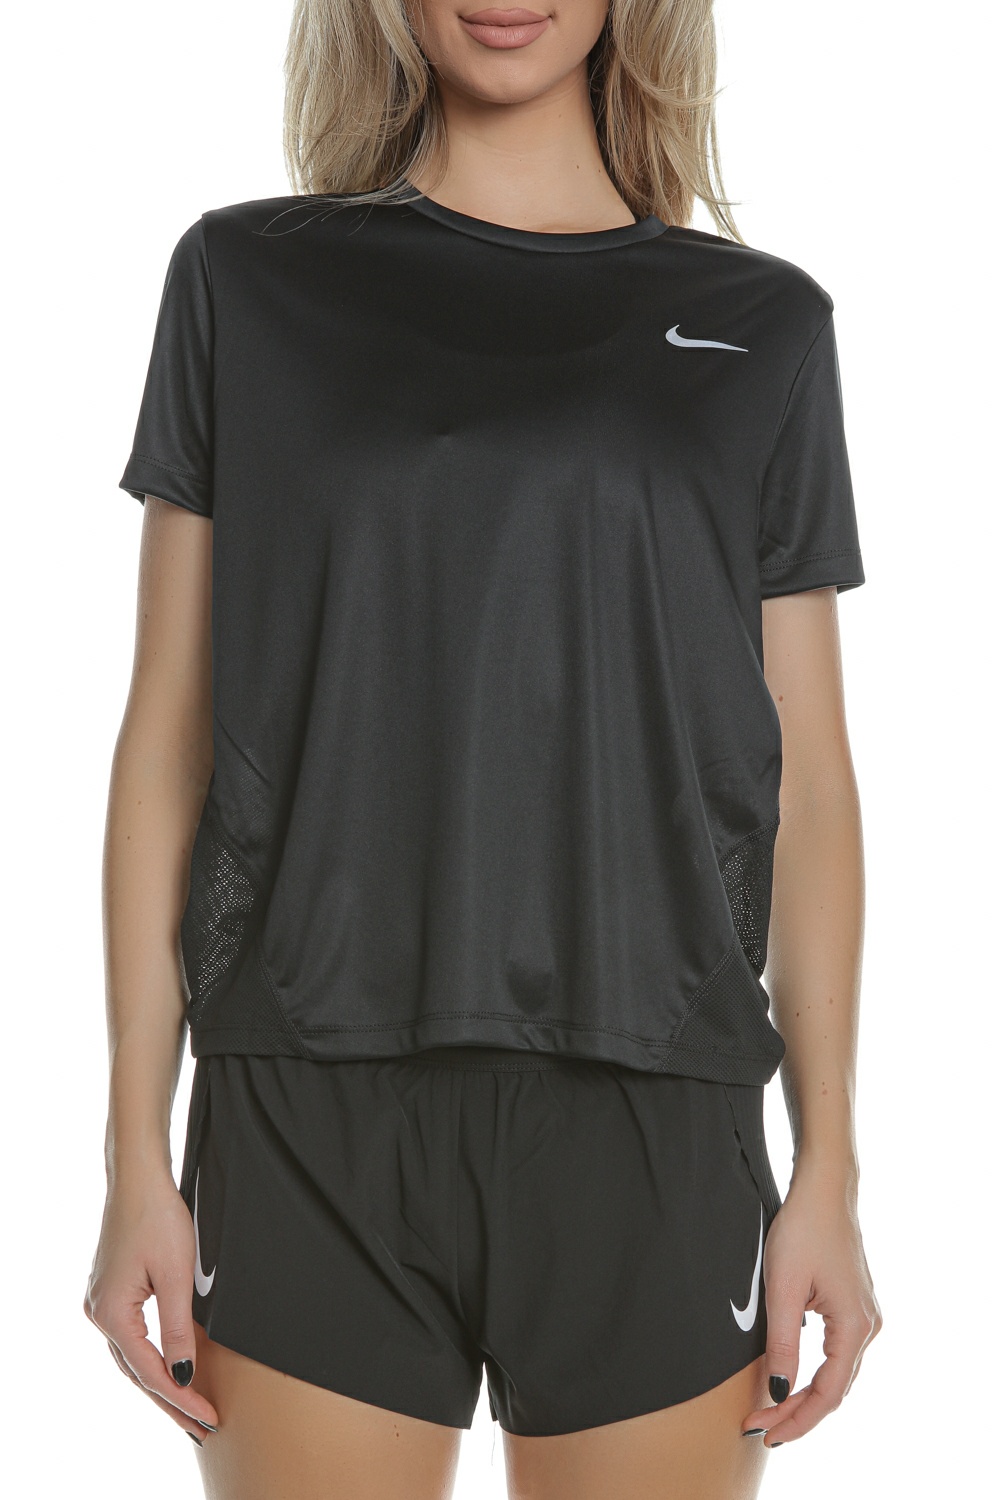 NIKE – Γυναικεια κοντομανικη μπλουζα για τρεξιμο Nike Miler μαυρη